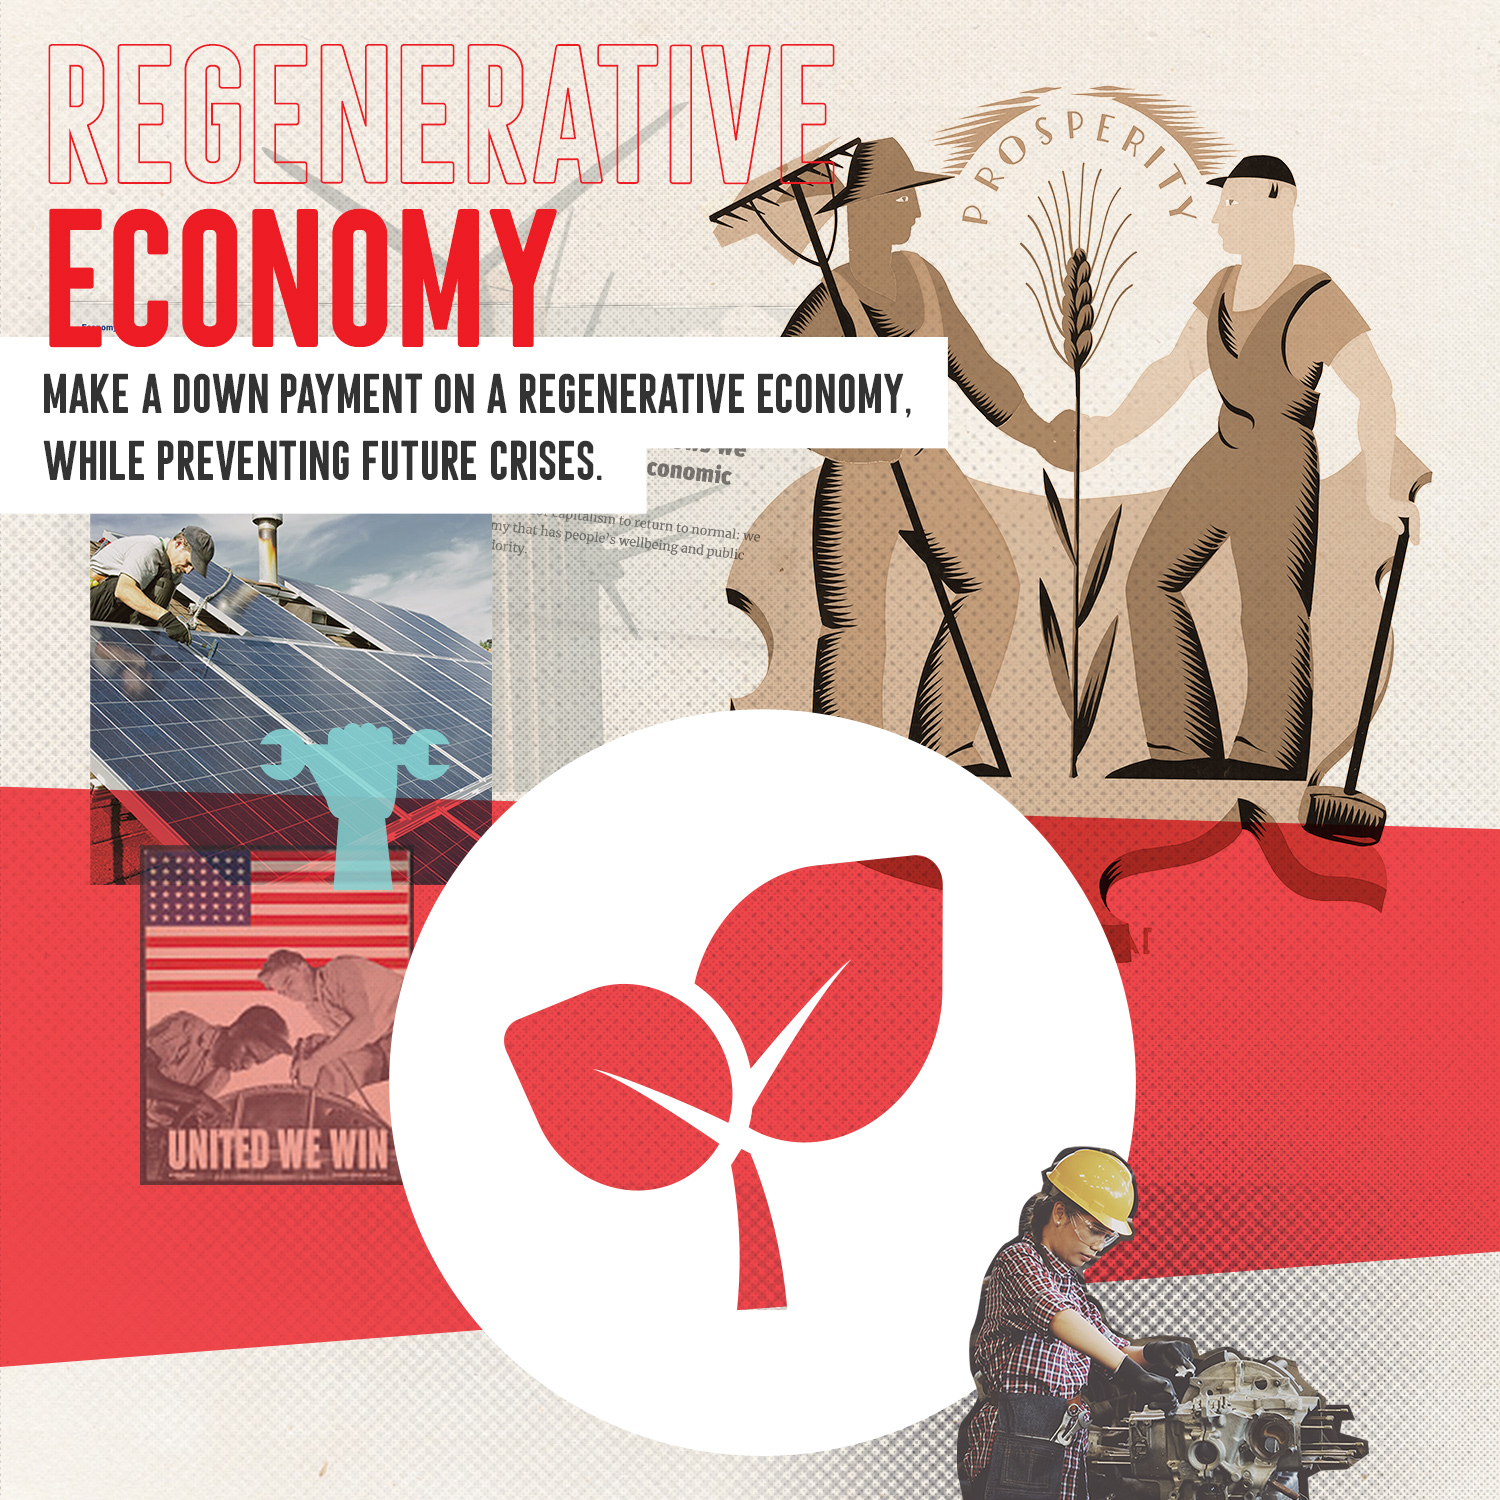 We need a regenerative economy